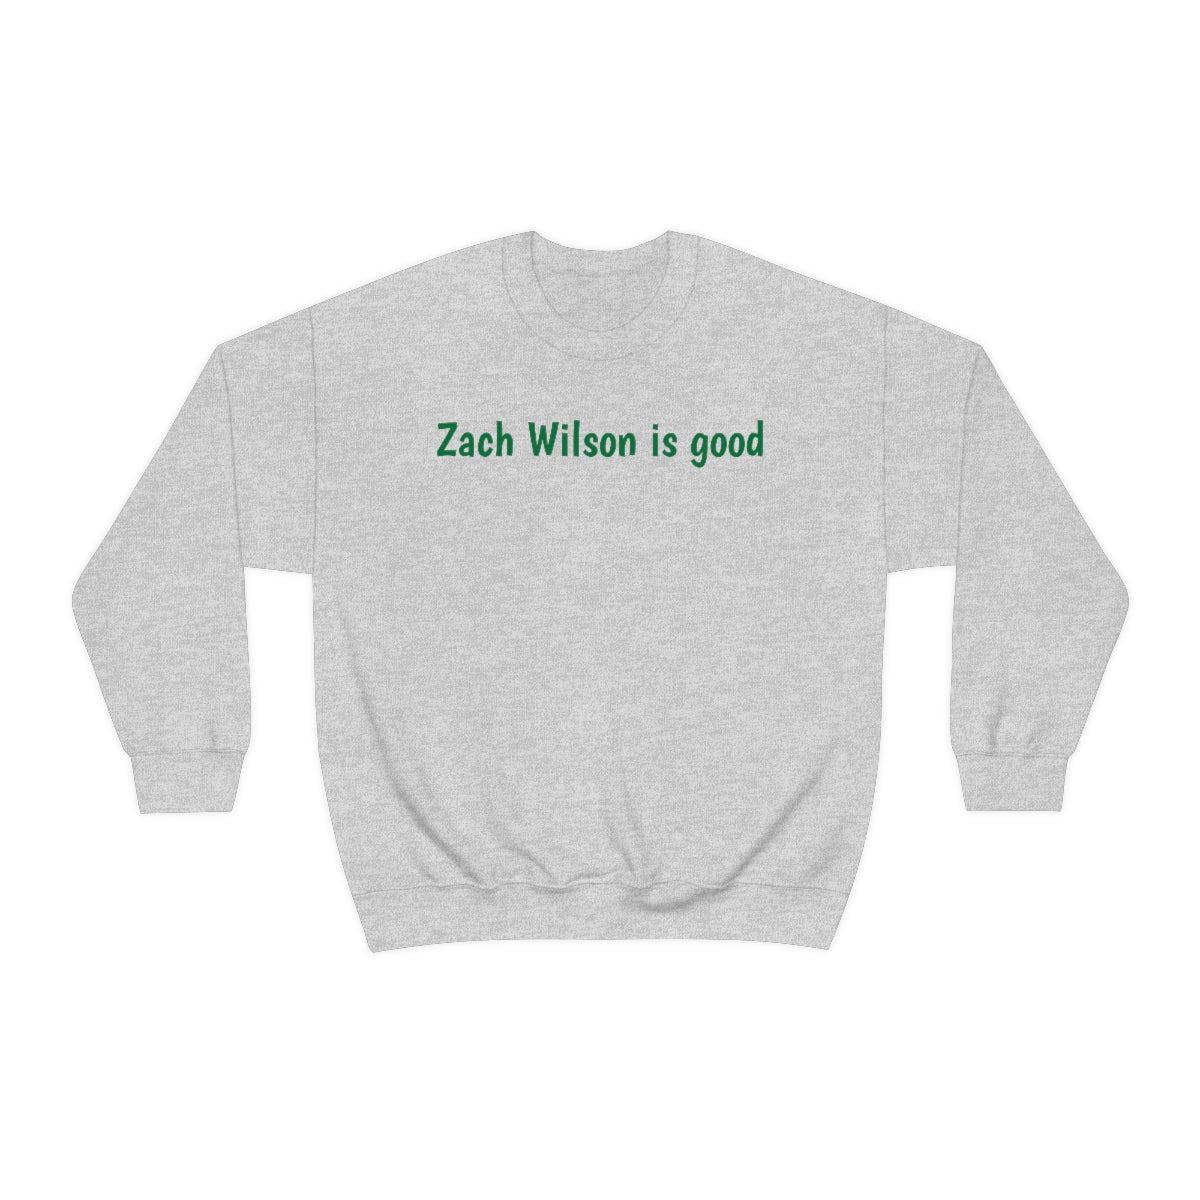 Zach Wilson is good Crewneck Sweatshirt - IsGoodBrand